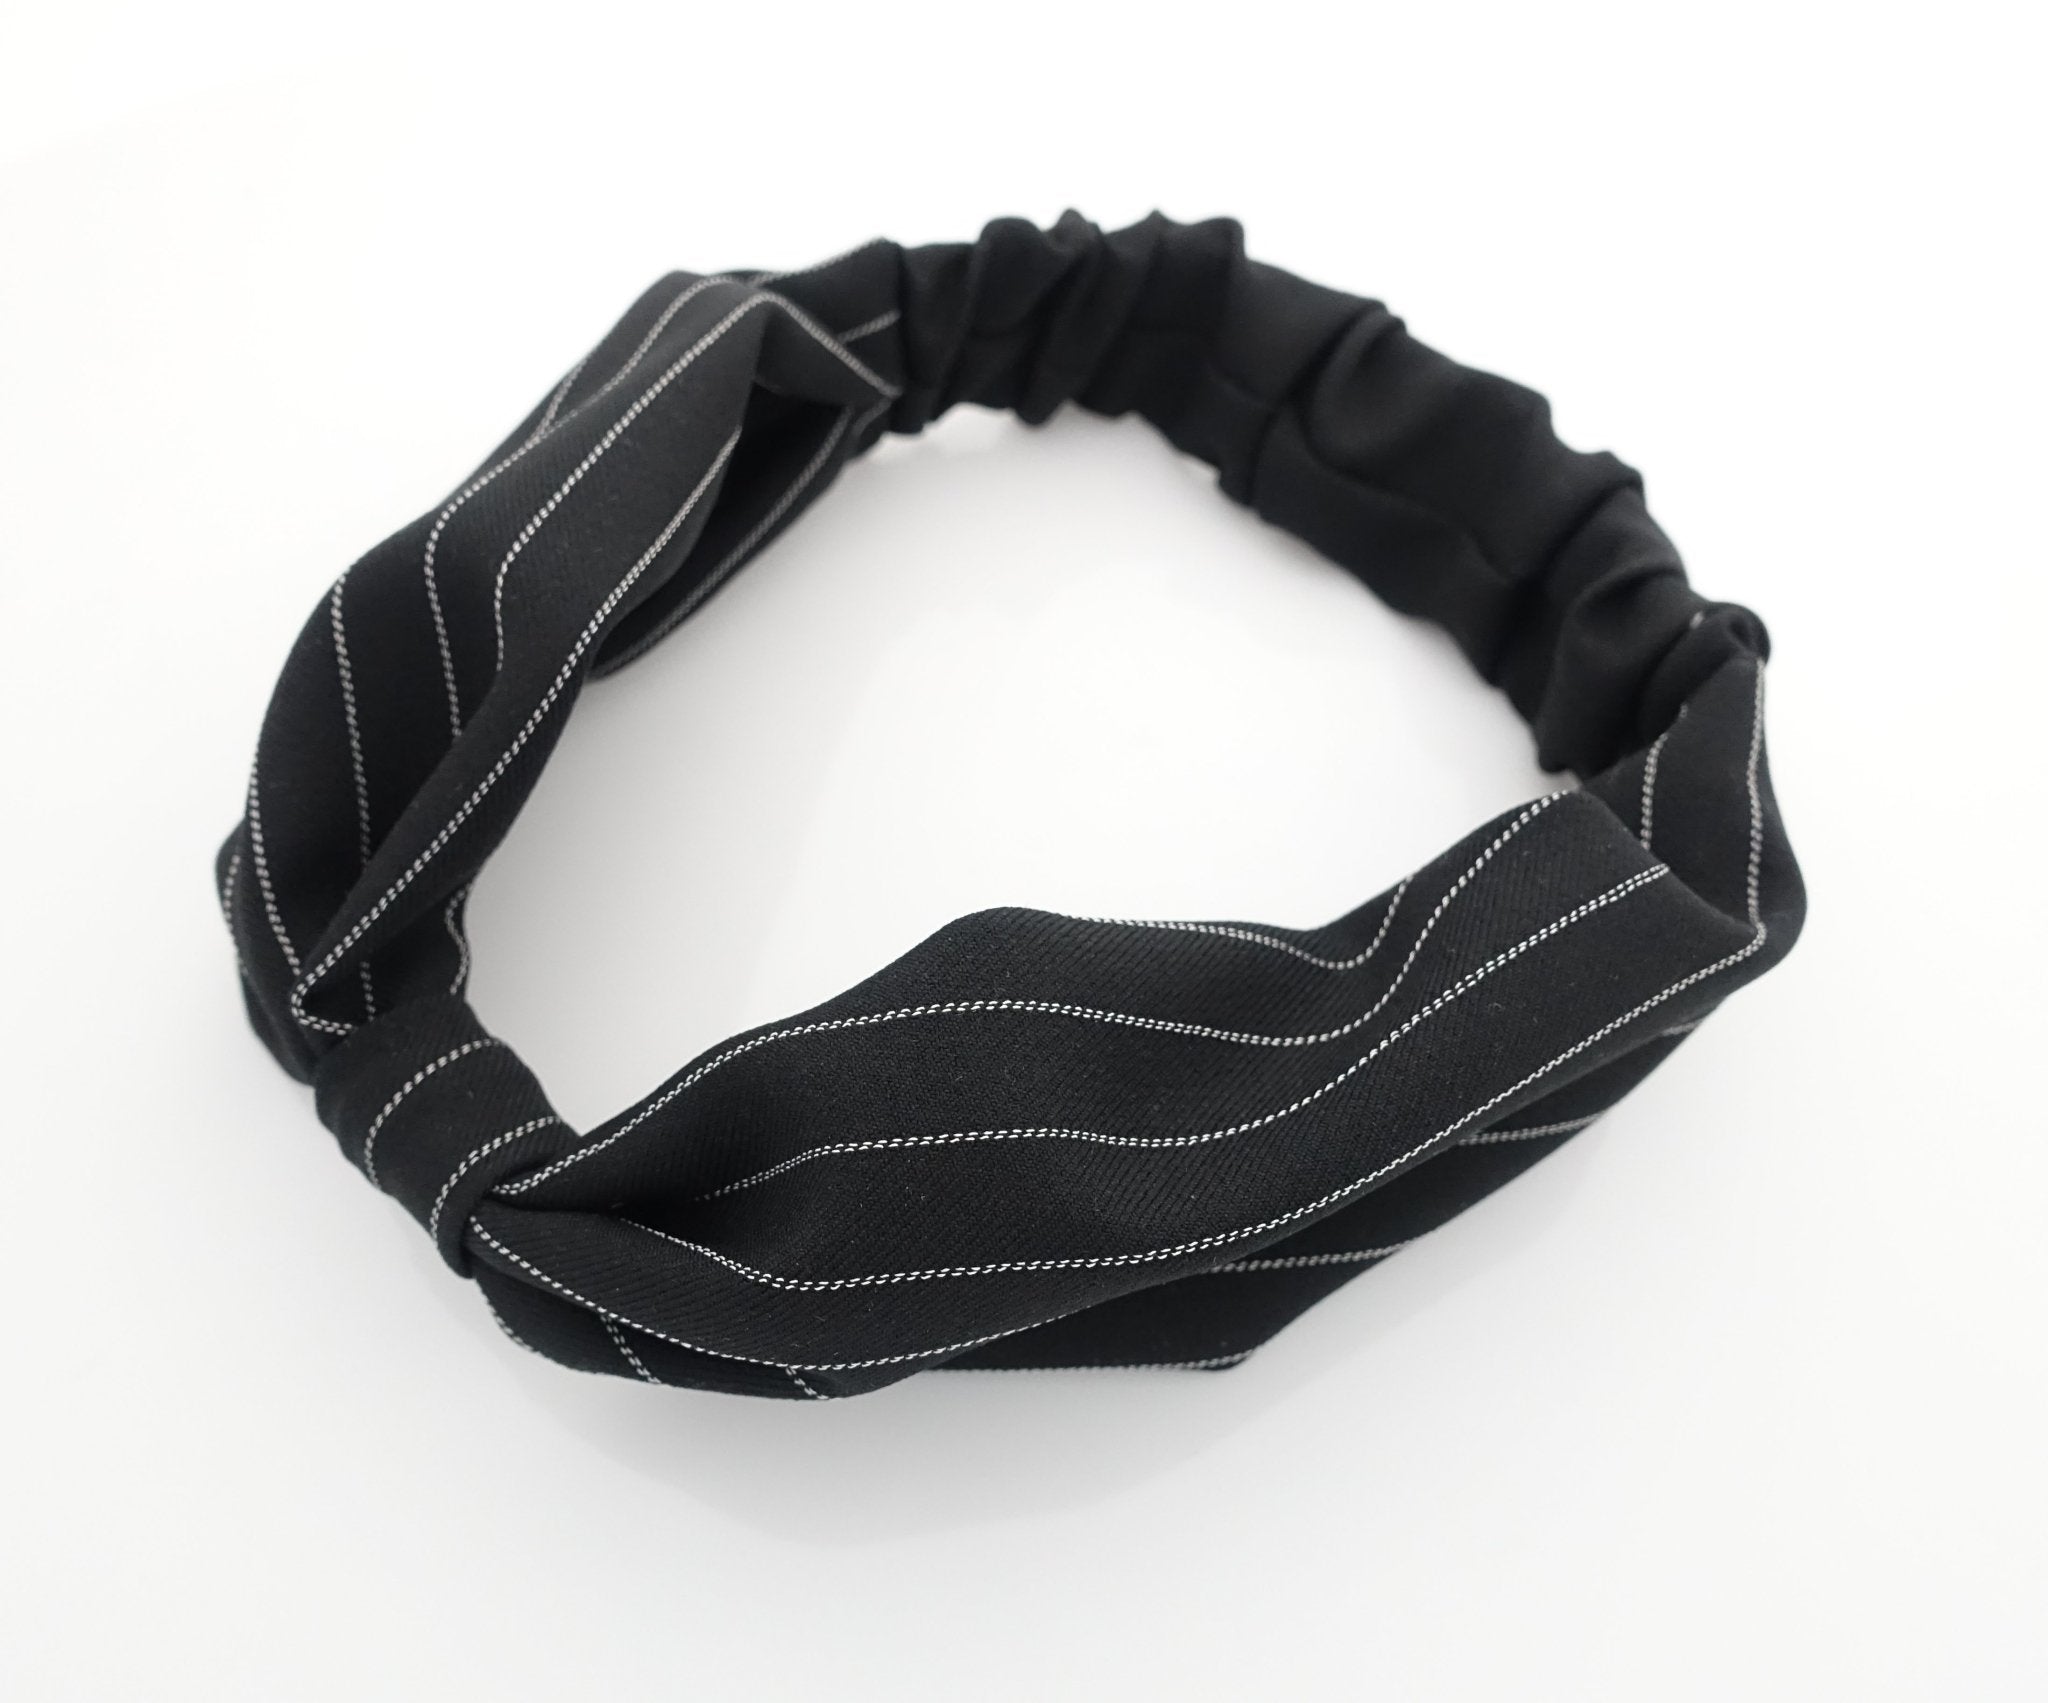 veryshine.com hairband/headband stripe pattern fashion headband suit style fabric headwrap women hair accessory